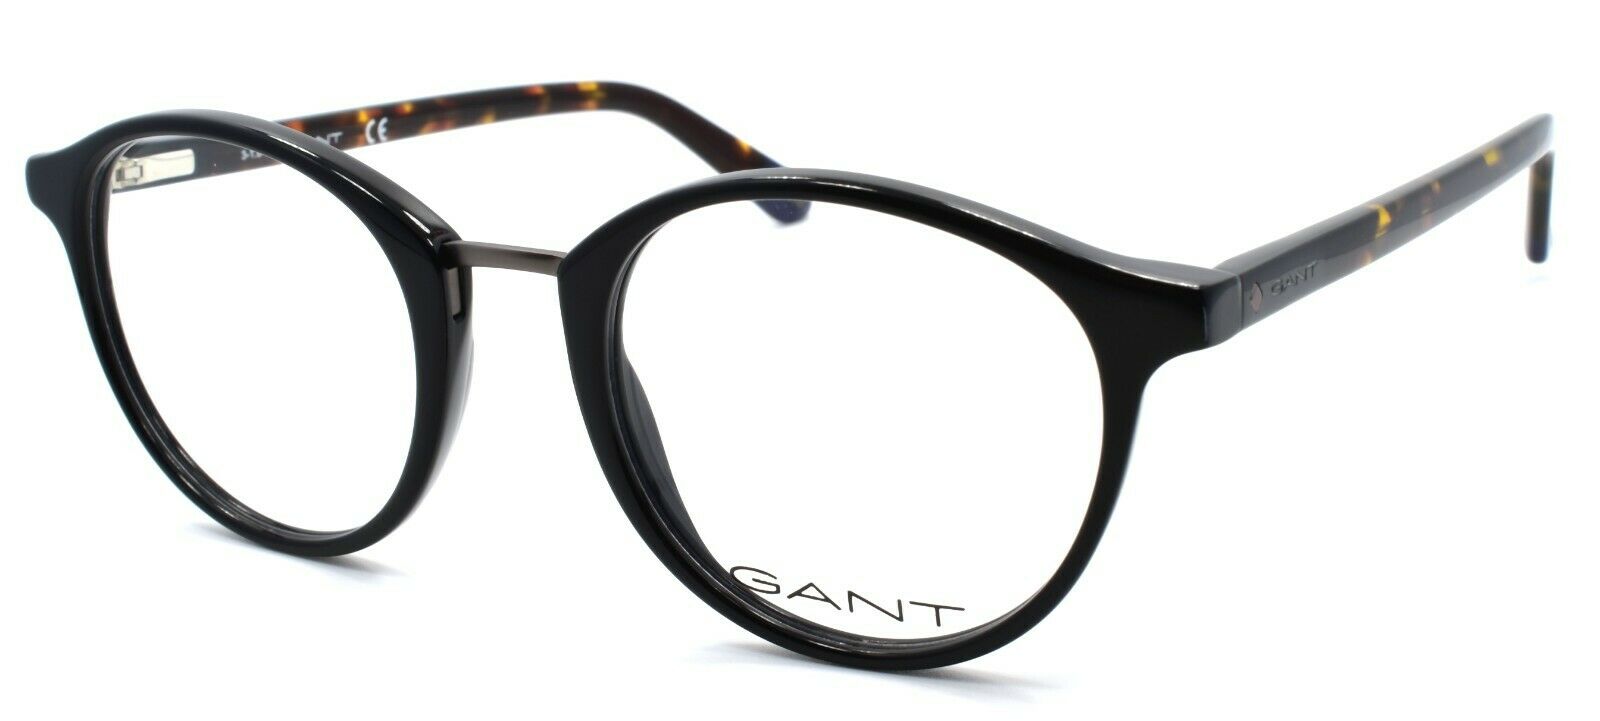 1-GANT GA3168 001 Men's Eyeglasses Frames 48-21-145 Black / Havana-664689951314-IKSpecs